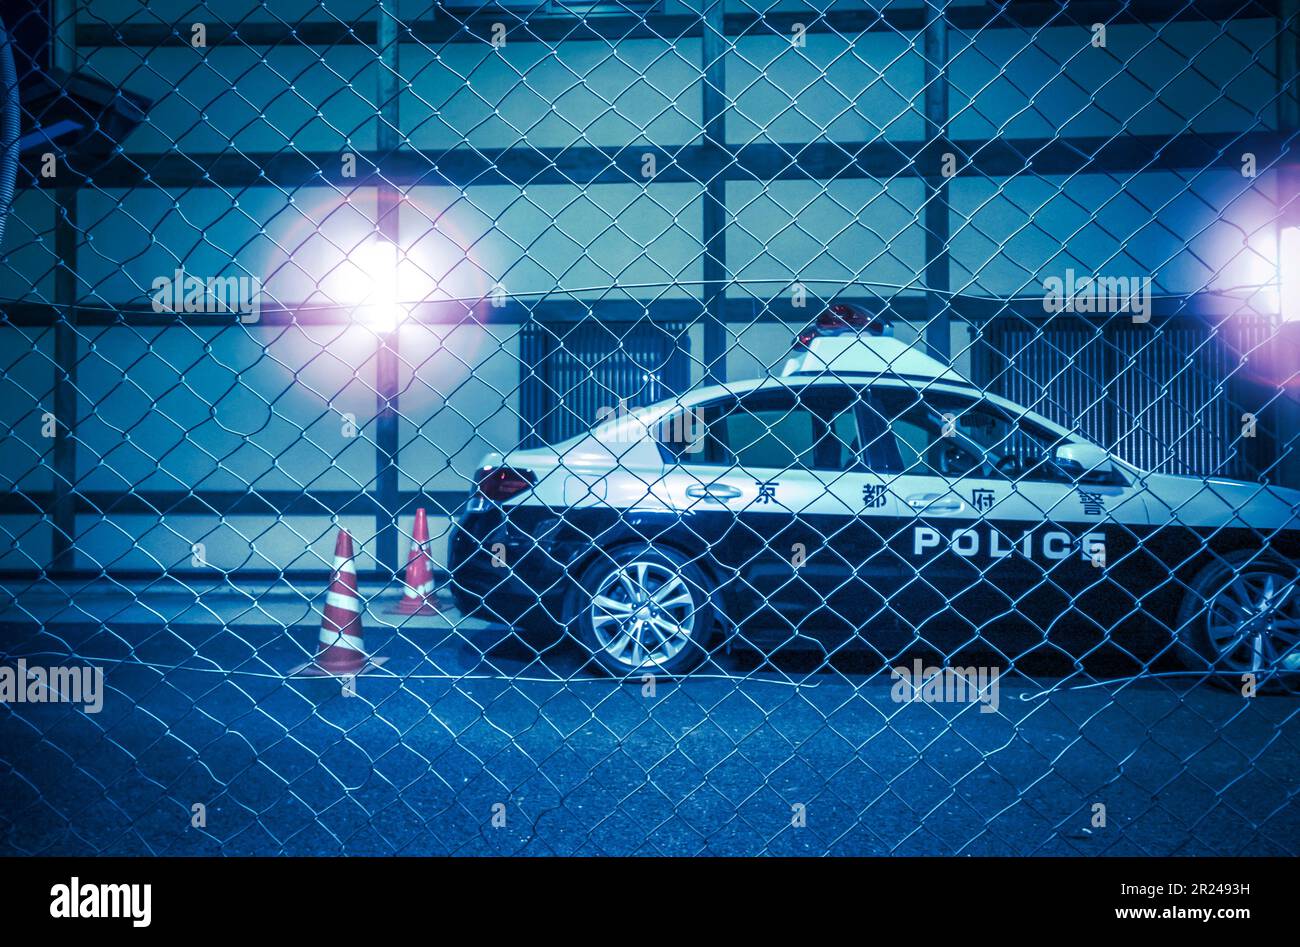 Kyoto- Japan- Circa November 2018. Police car at vigilance night behind wire fence with lights. Stock Photo